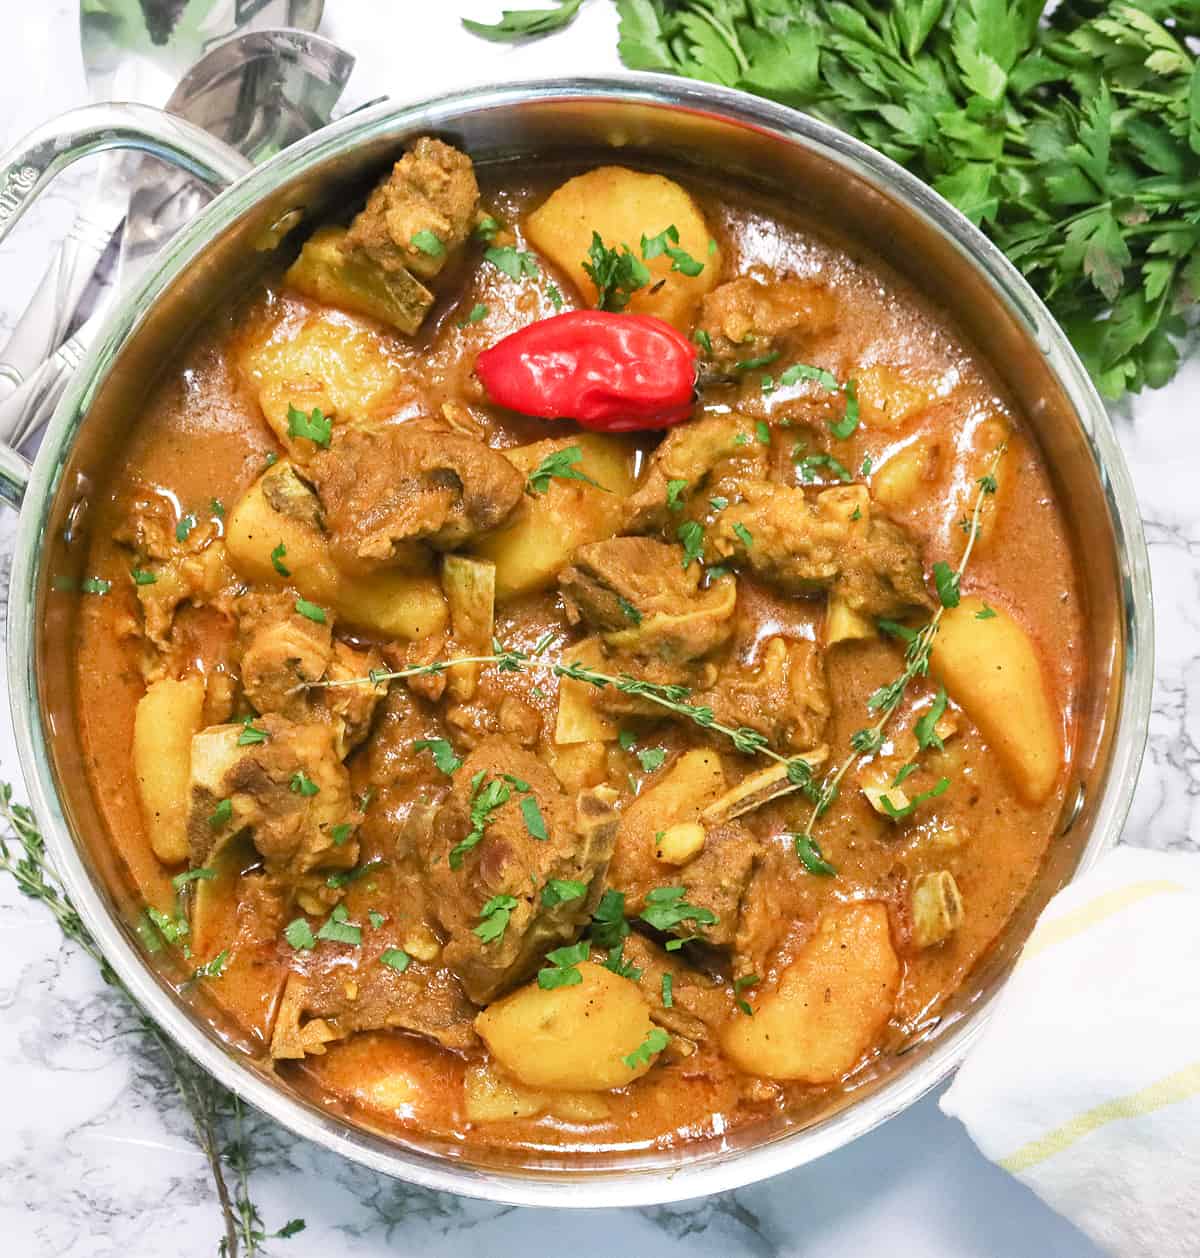 A fresh pot of lamb curry ready to enjoy